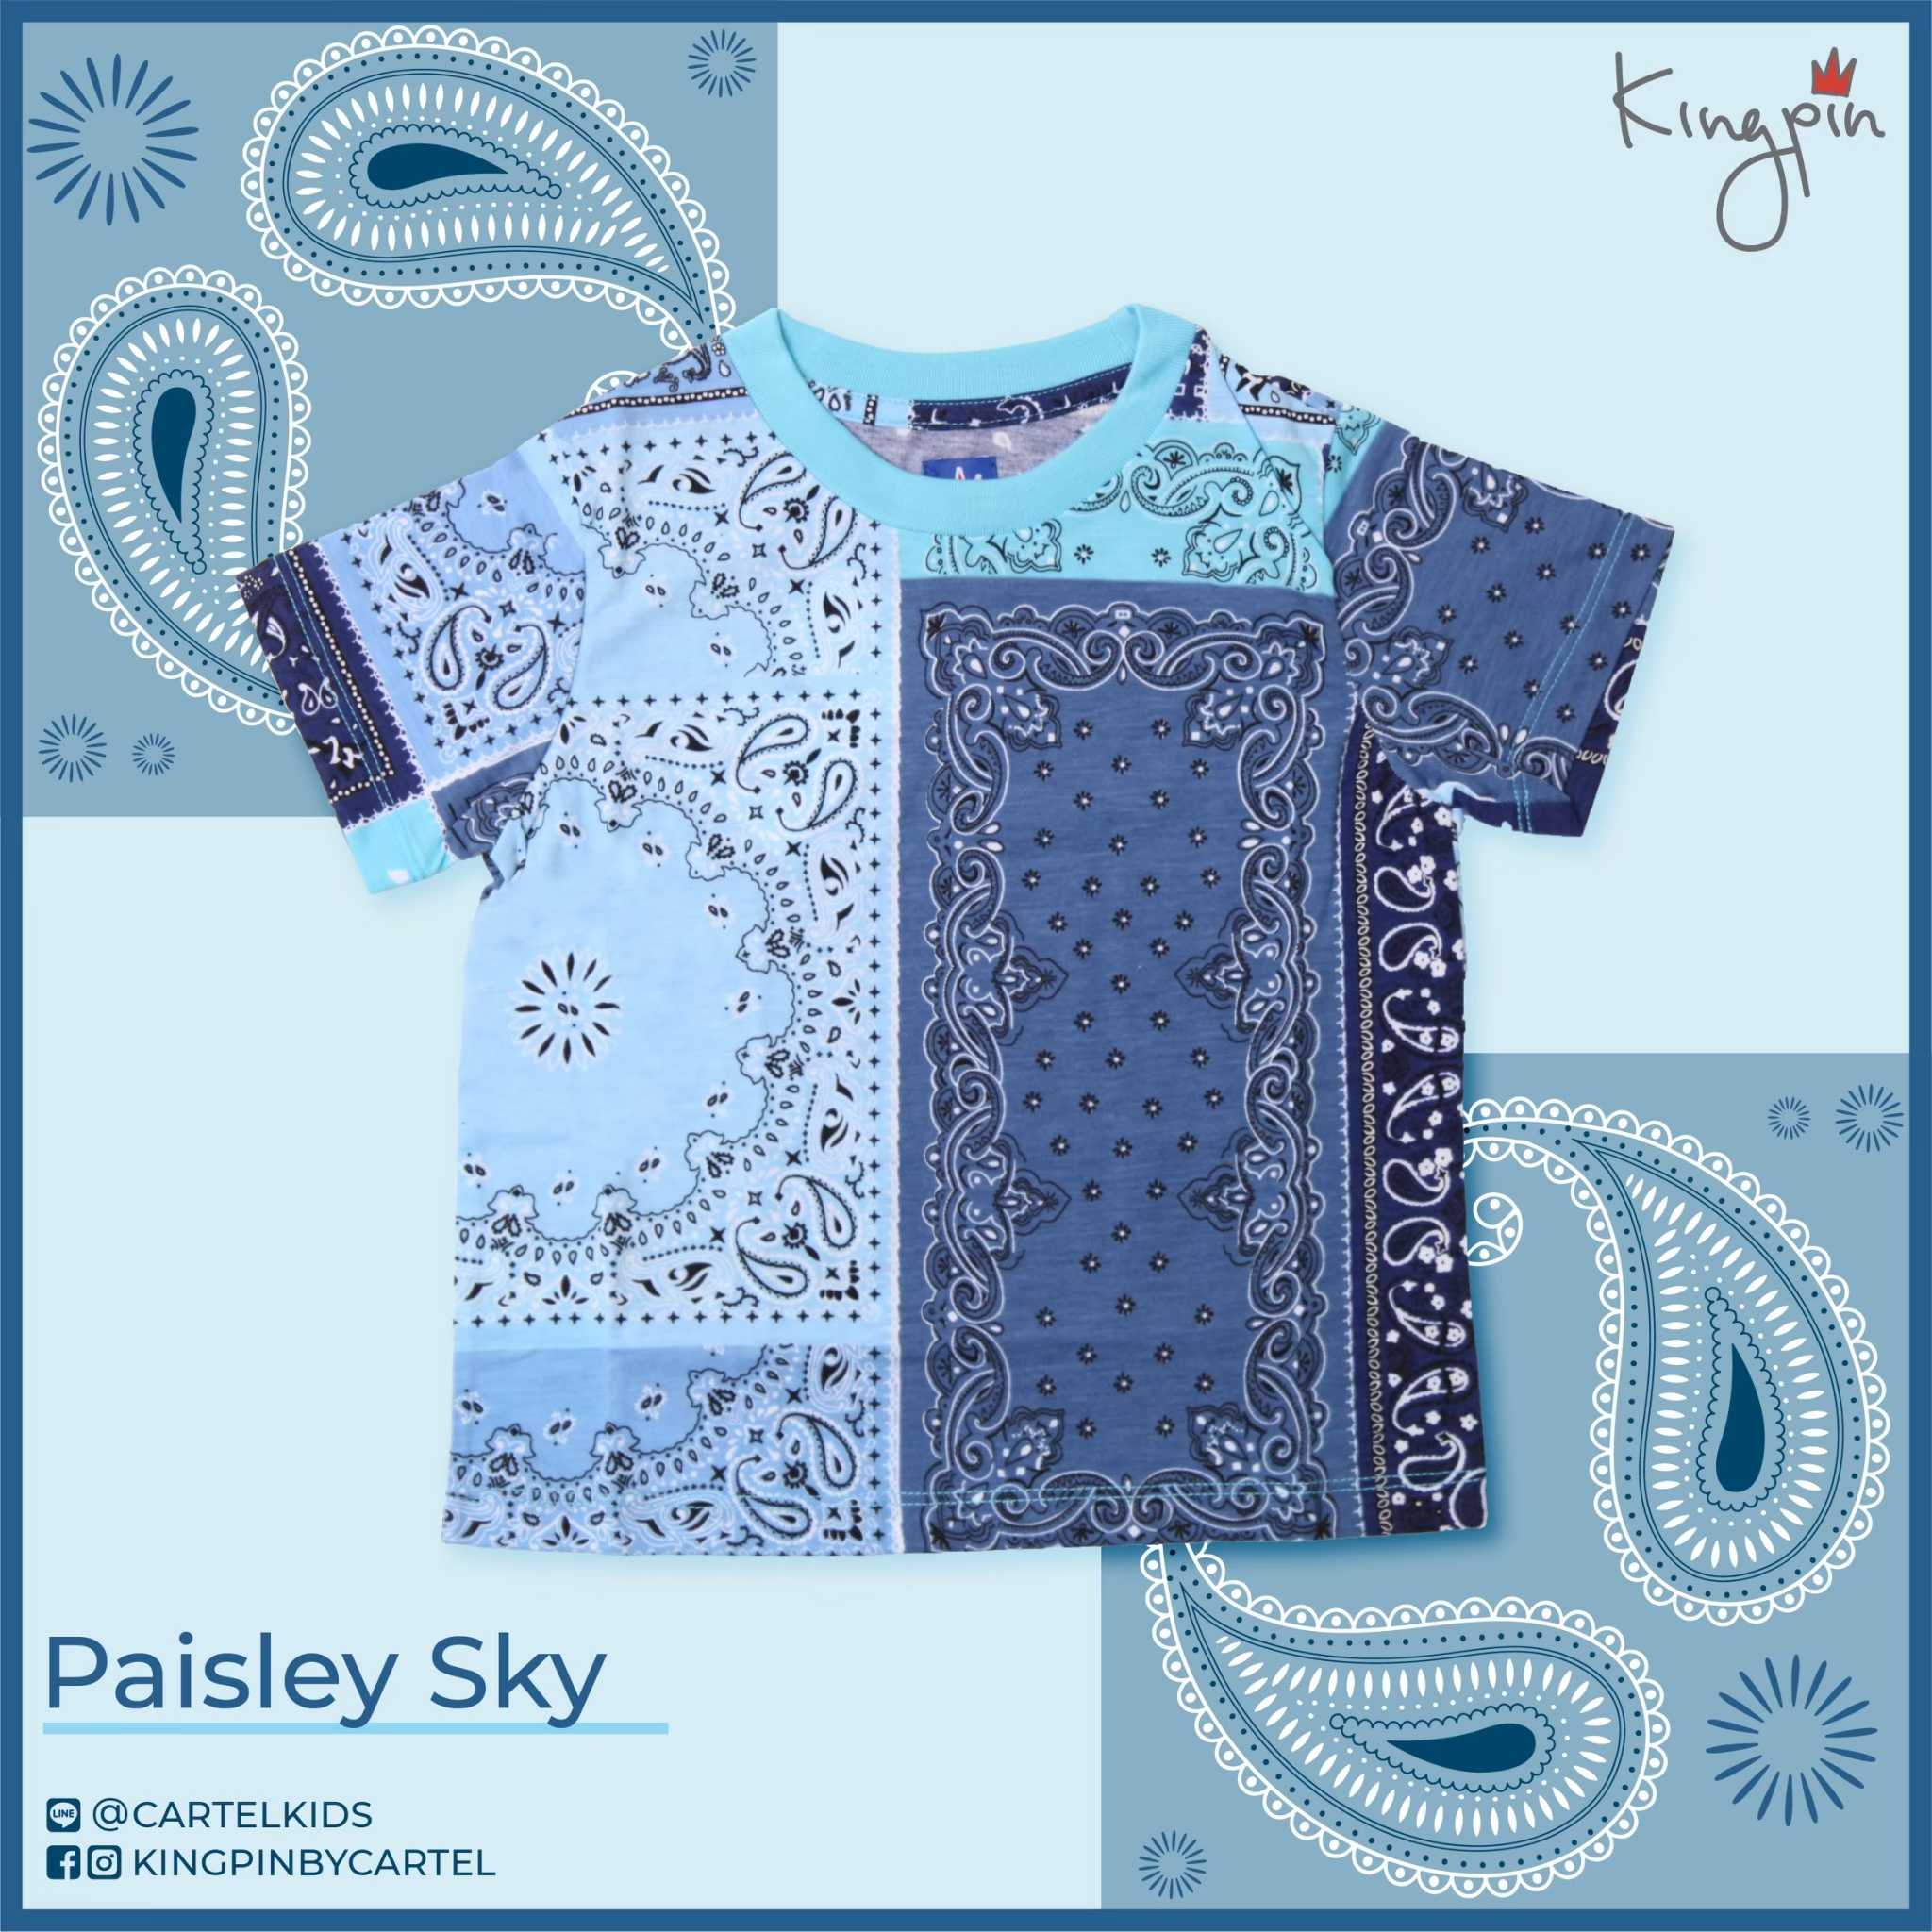 KINGPIN Paisley Sky T-shirt l เสื้อยืดสีฟ้าน่ารัก